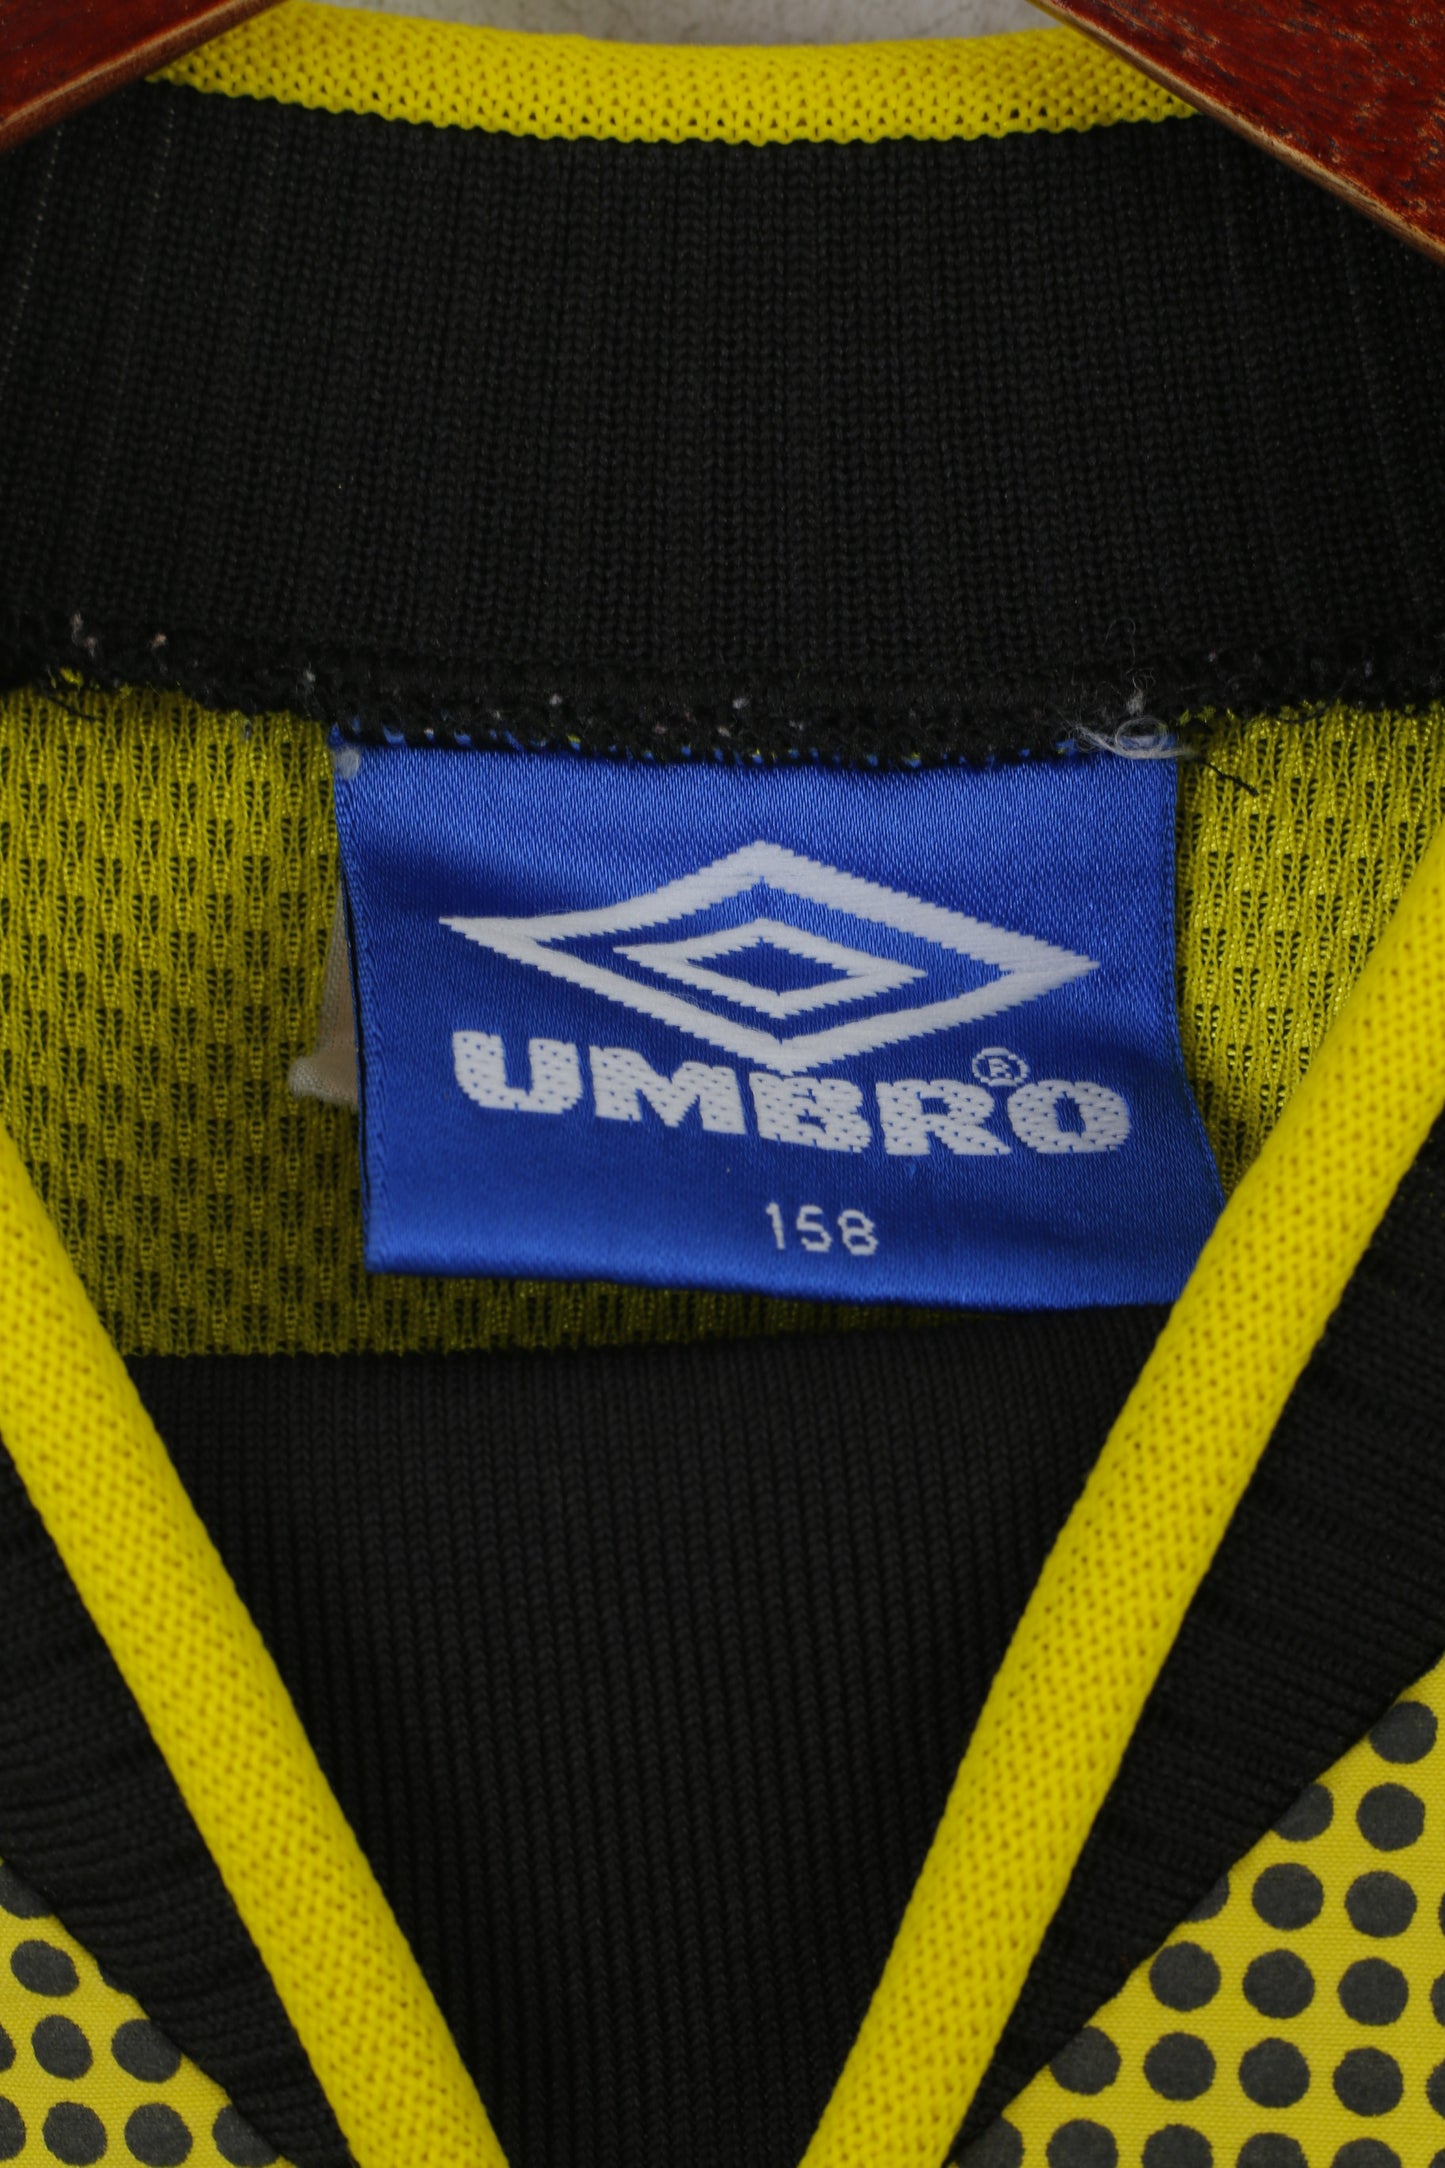 Umbro Boys 158 12-13 Age Shirt Yellow England Football Club Long Sleeve Jersey Top